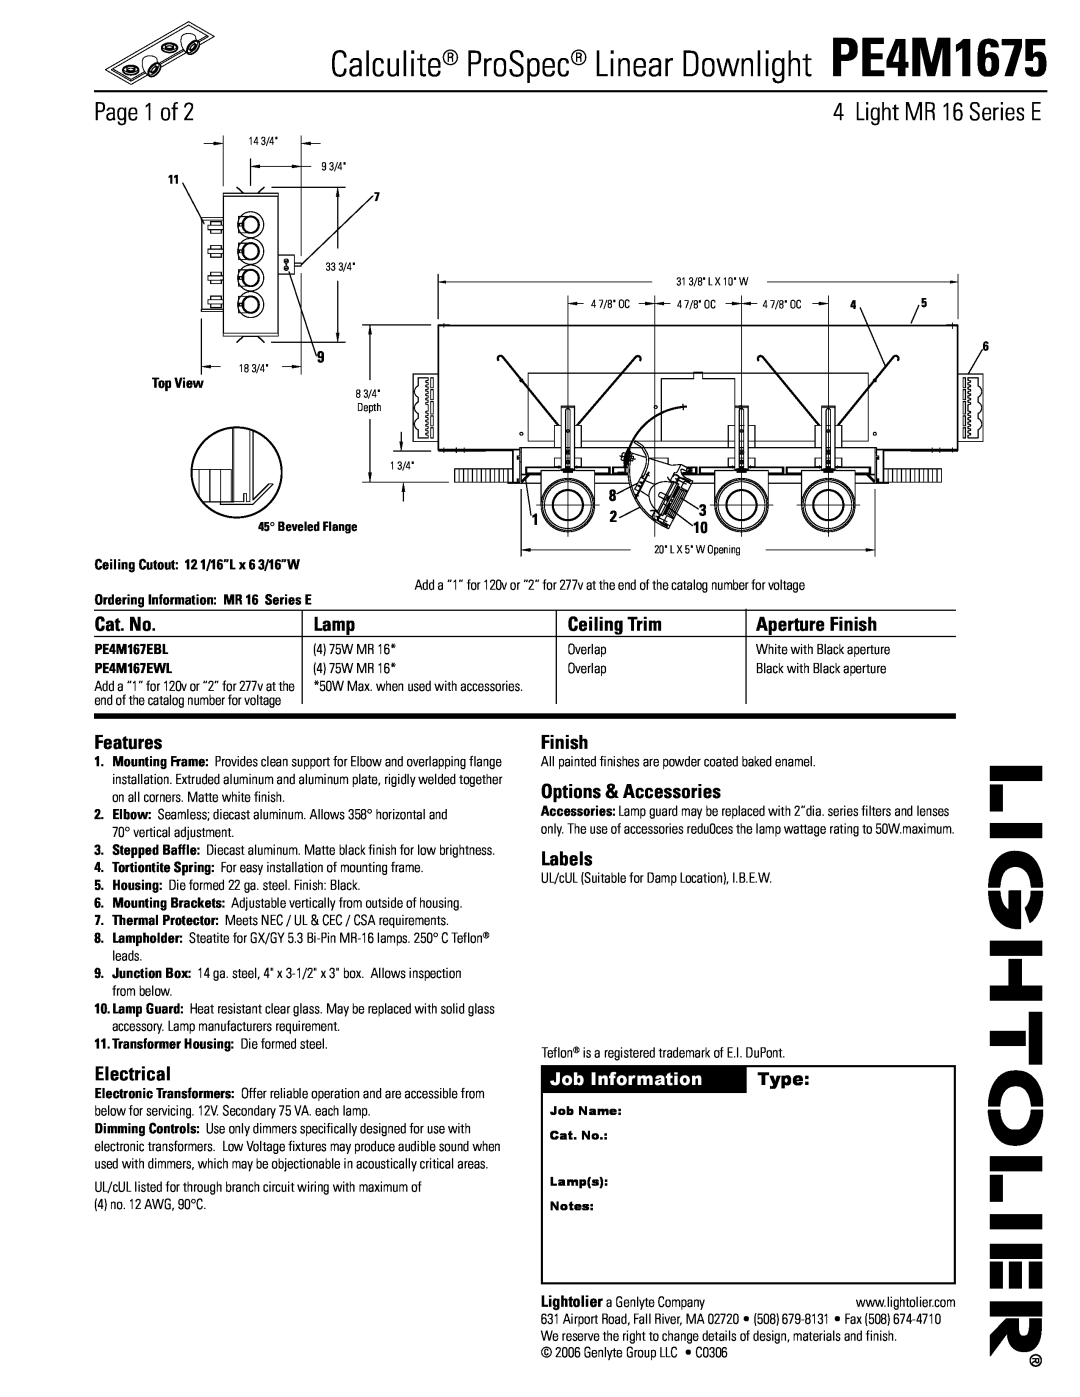 Lightolier manual Calculite ProSpec Linear Downlight PE4M1675, Page 1 of, Light MR 16 Series E, Cat. No, Lamp, Features 